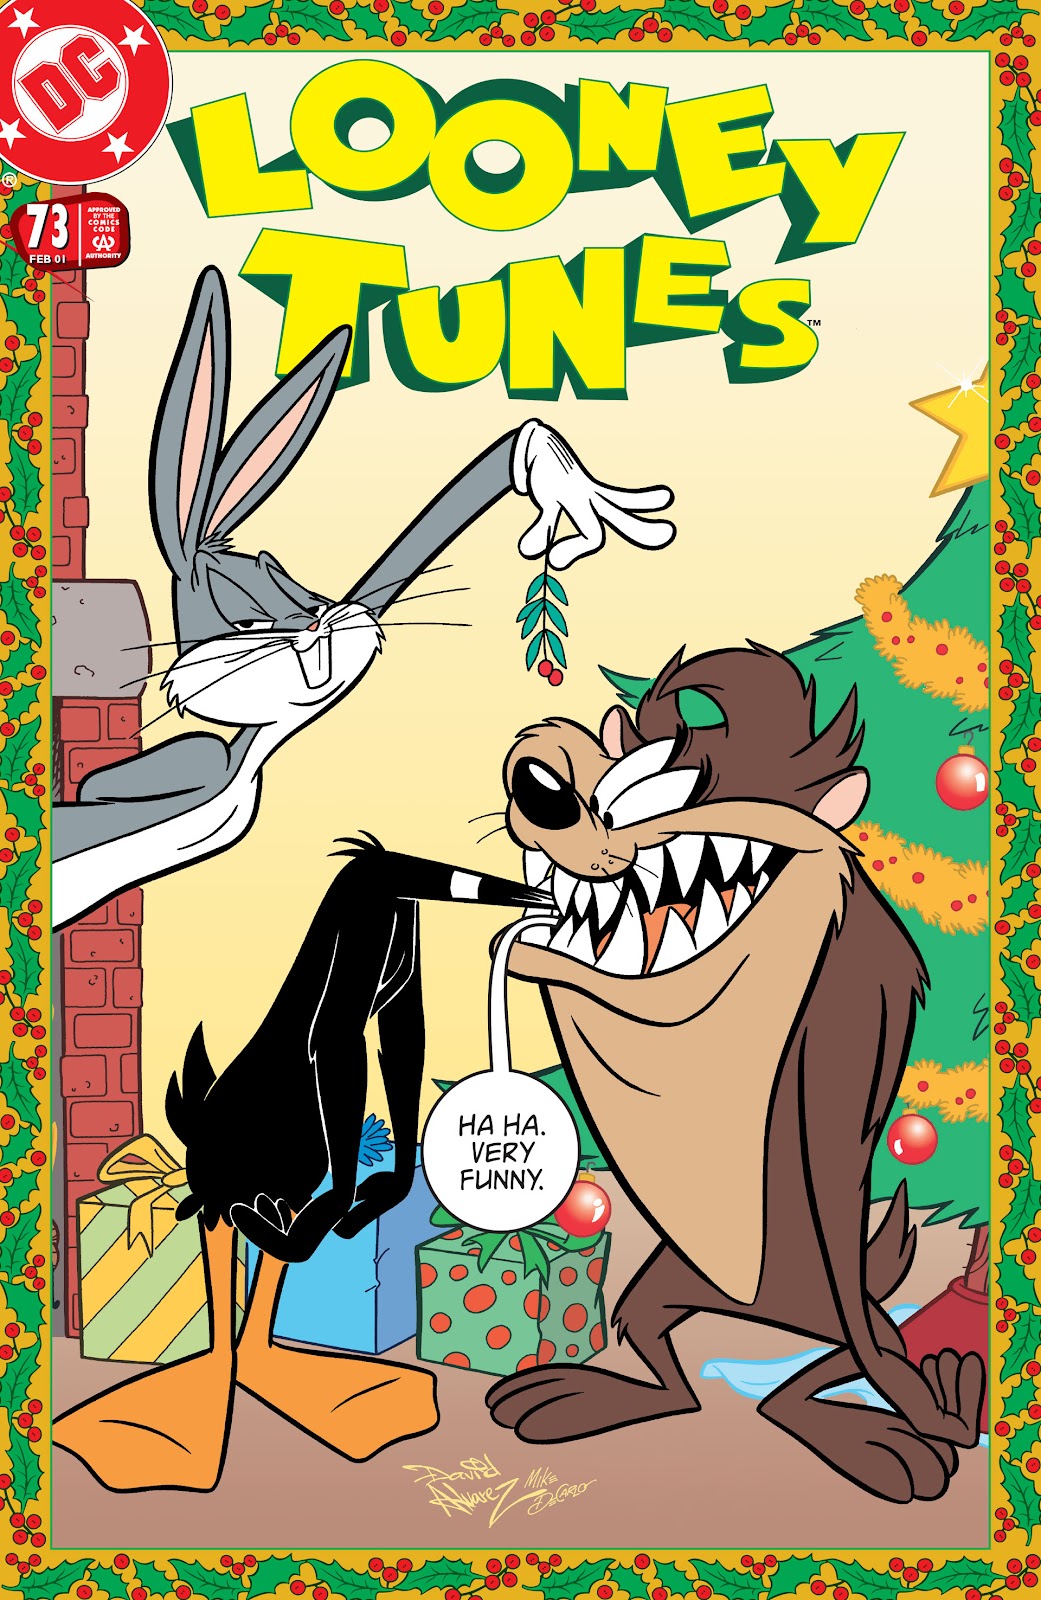 Looney Tunes (1994) Issue #73 #33 - English 1